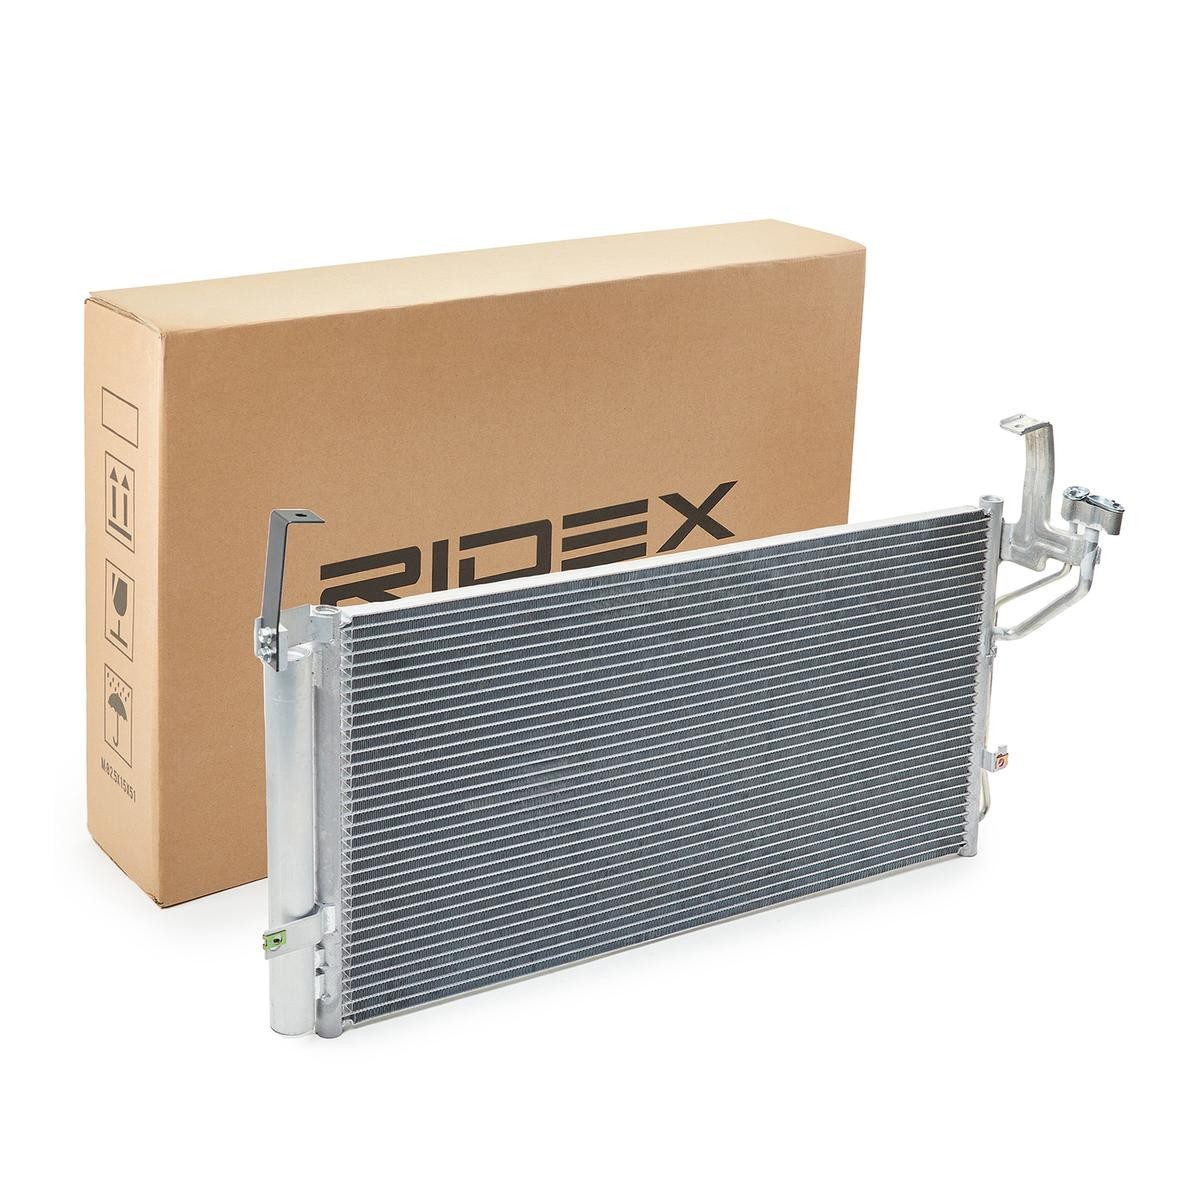 RIDEX 448C0169 Air conditioning condenser with dryer, 341mm, 661mm